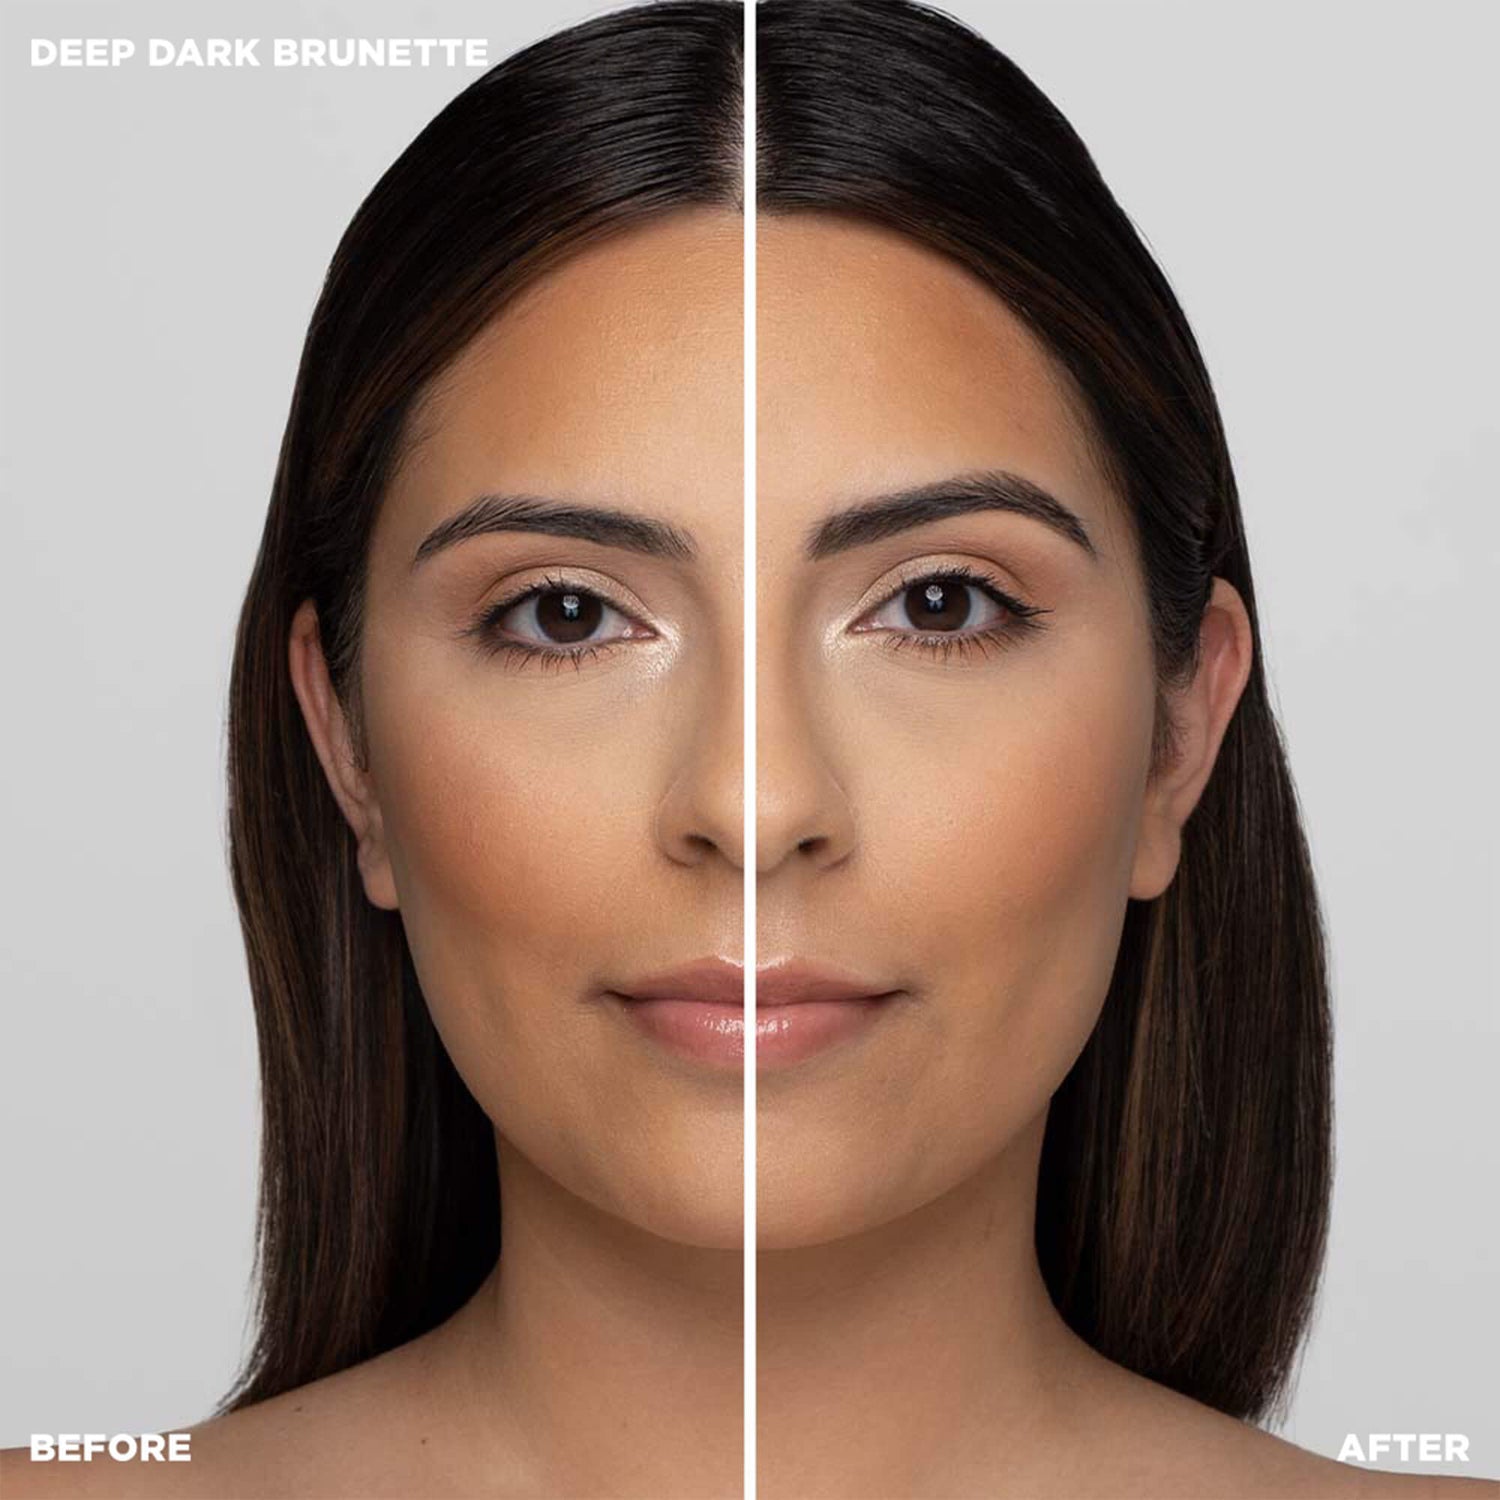 Before and after shot of model wearing Deep Dark Brunette - Dark Brown